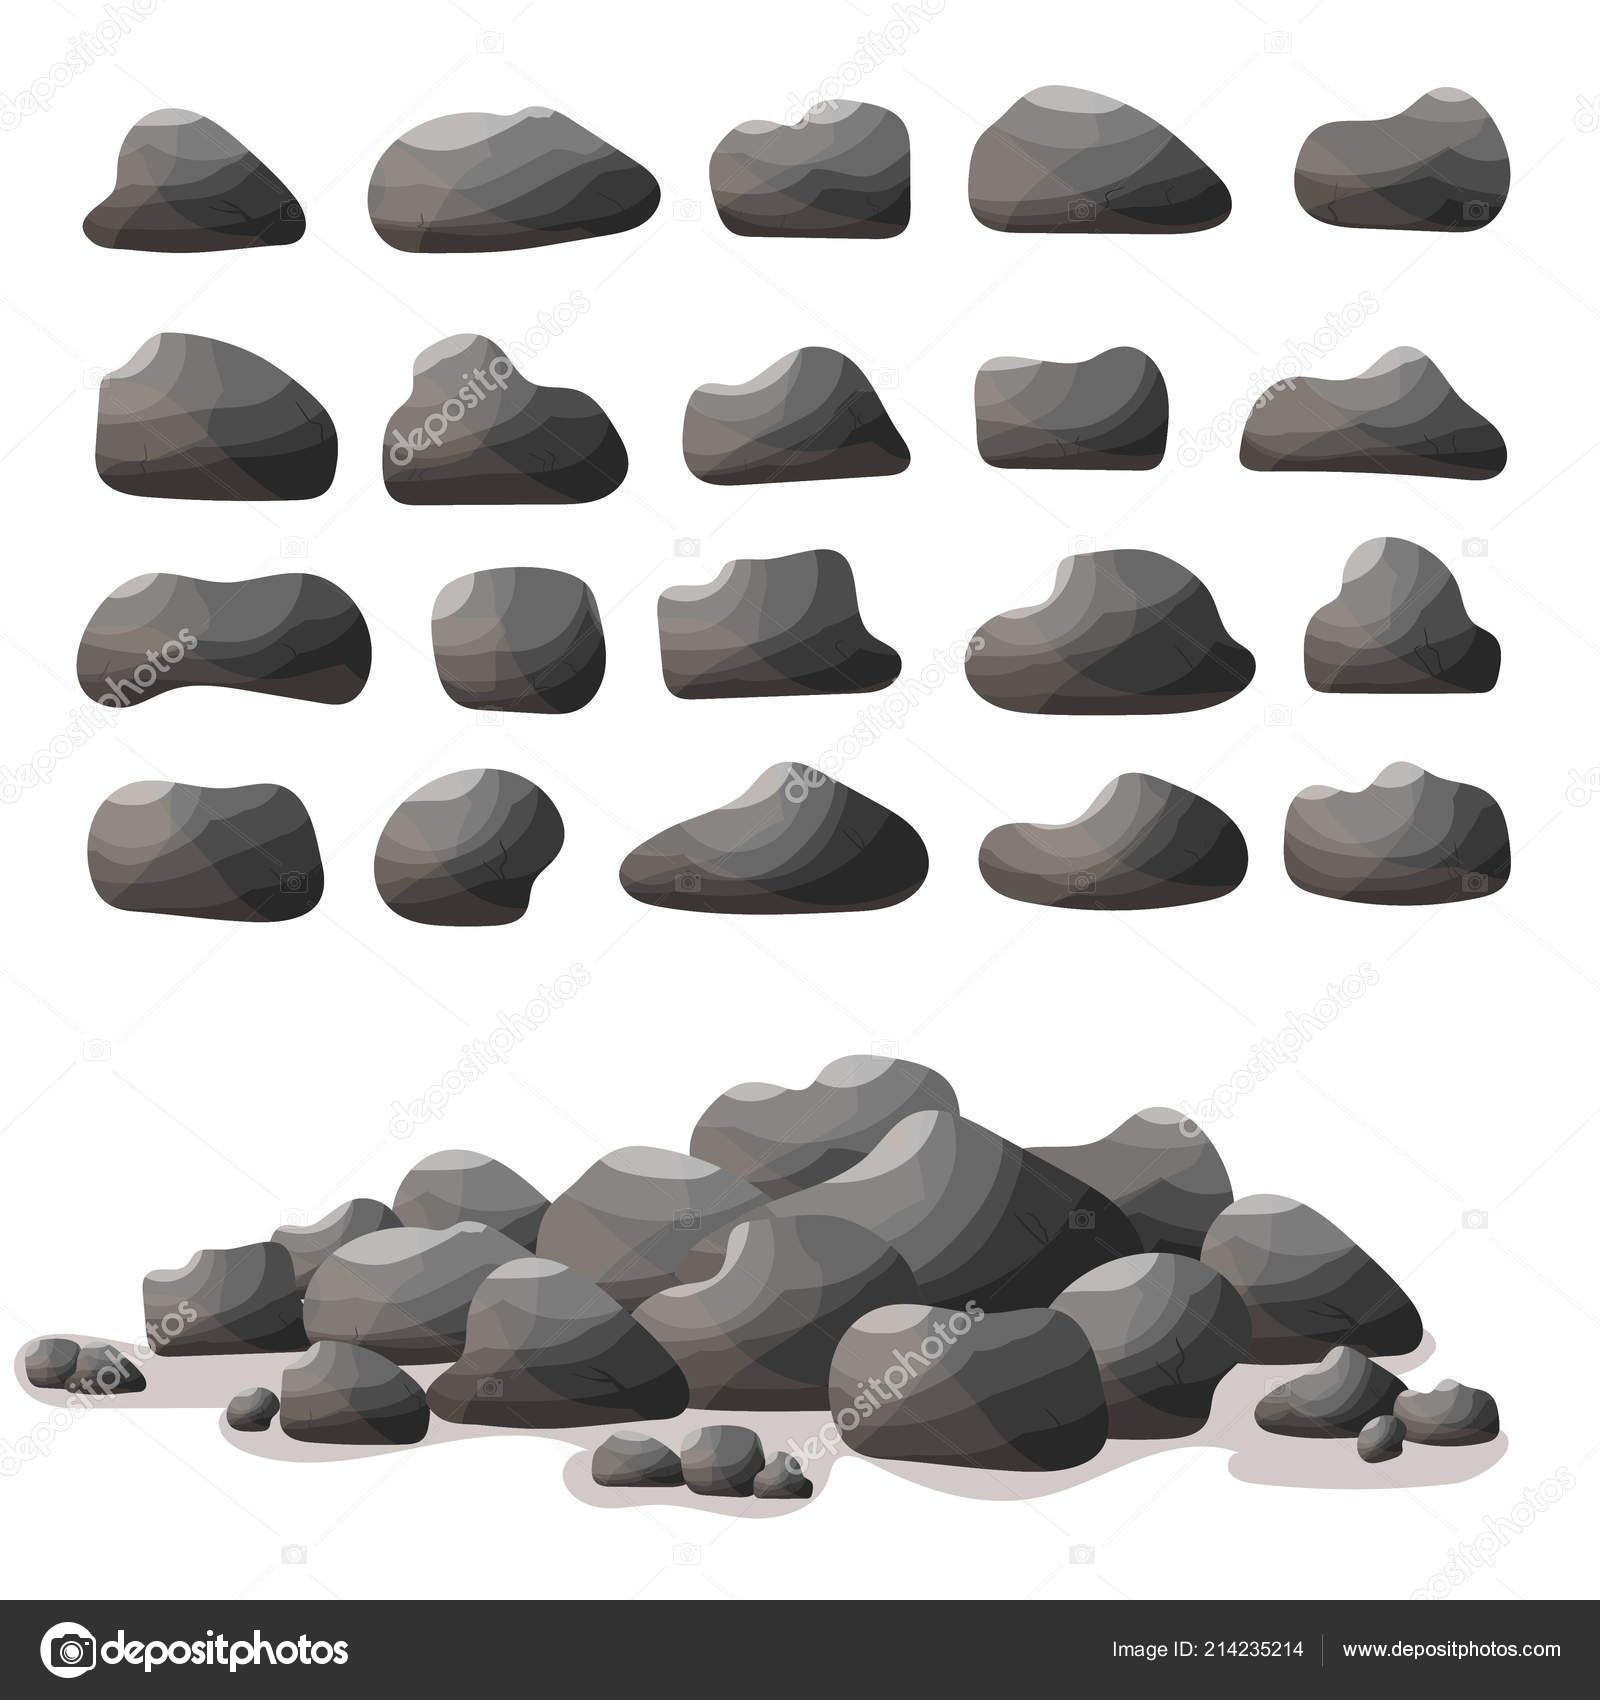 Stacks of flat rocks set, Stock vector